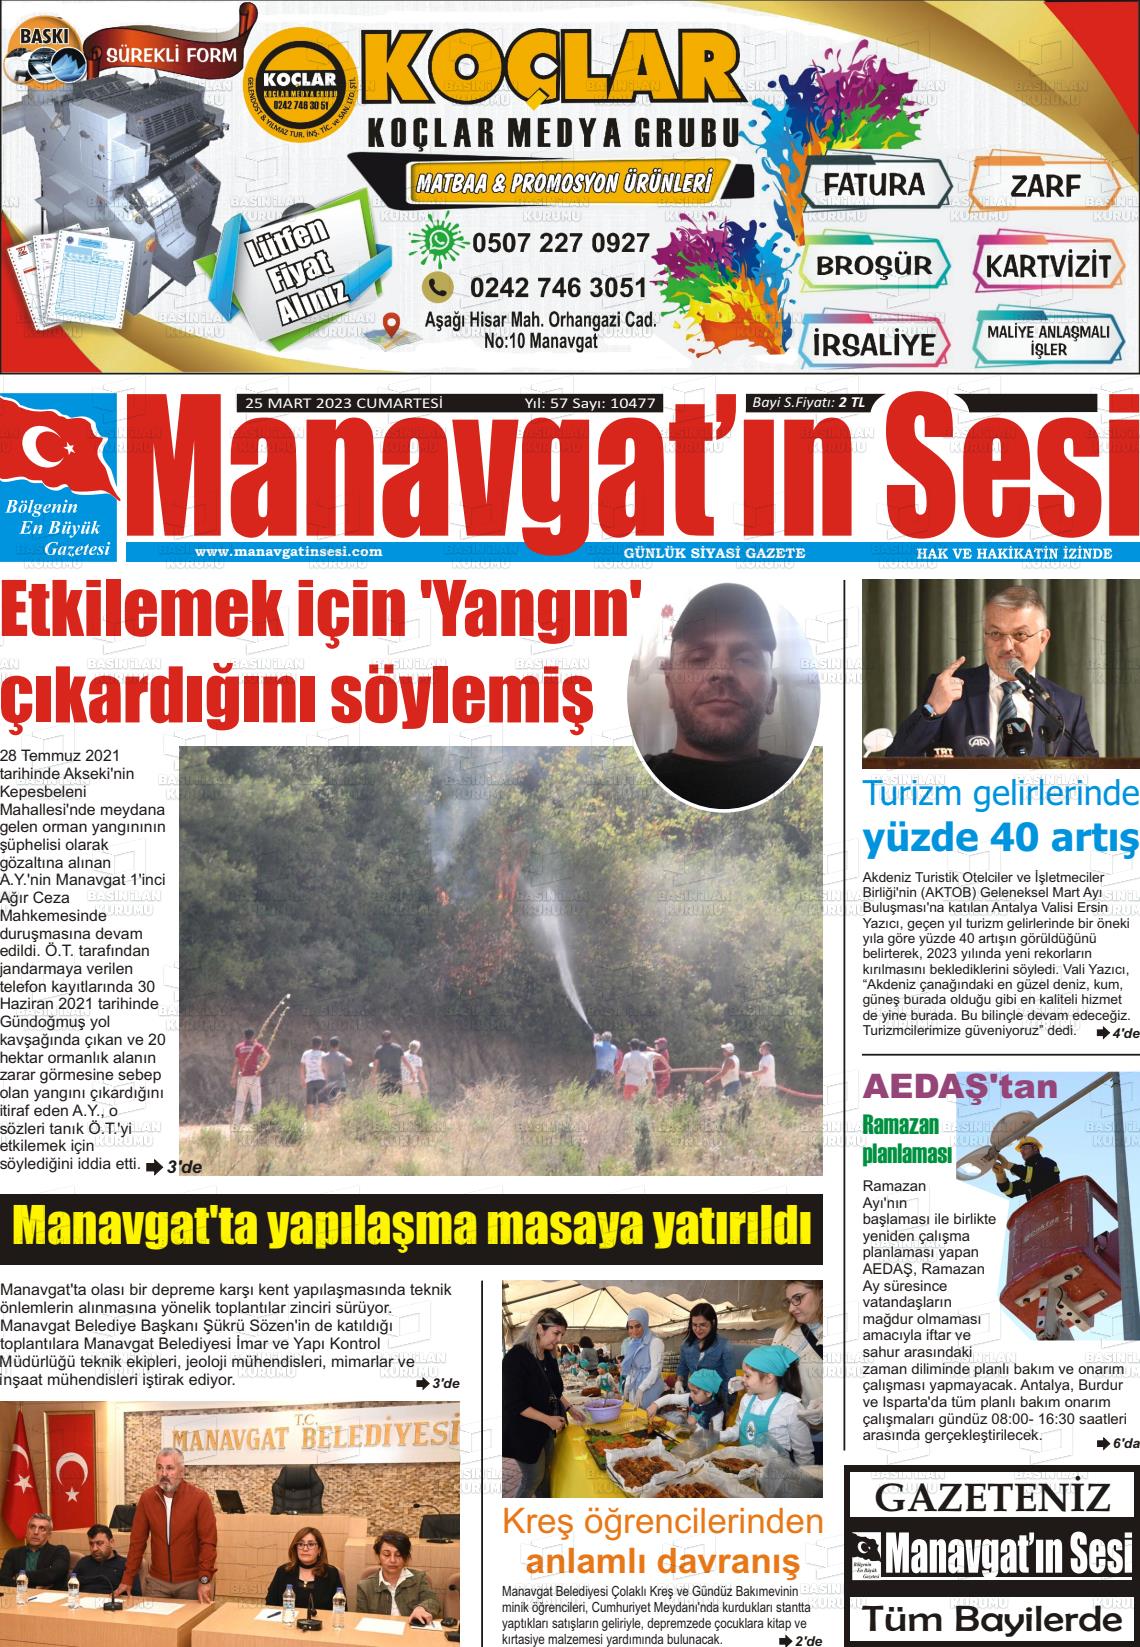 25 Mart 2023 Manavgat'ın Sesi Gazete Manşeti